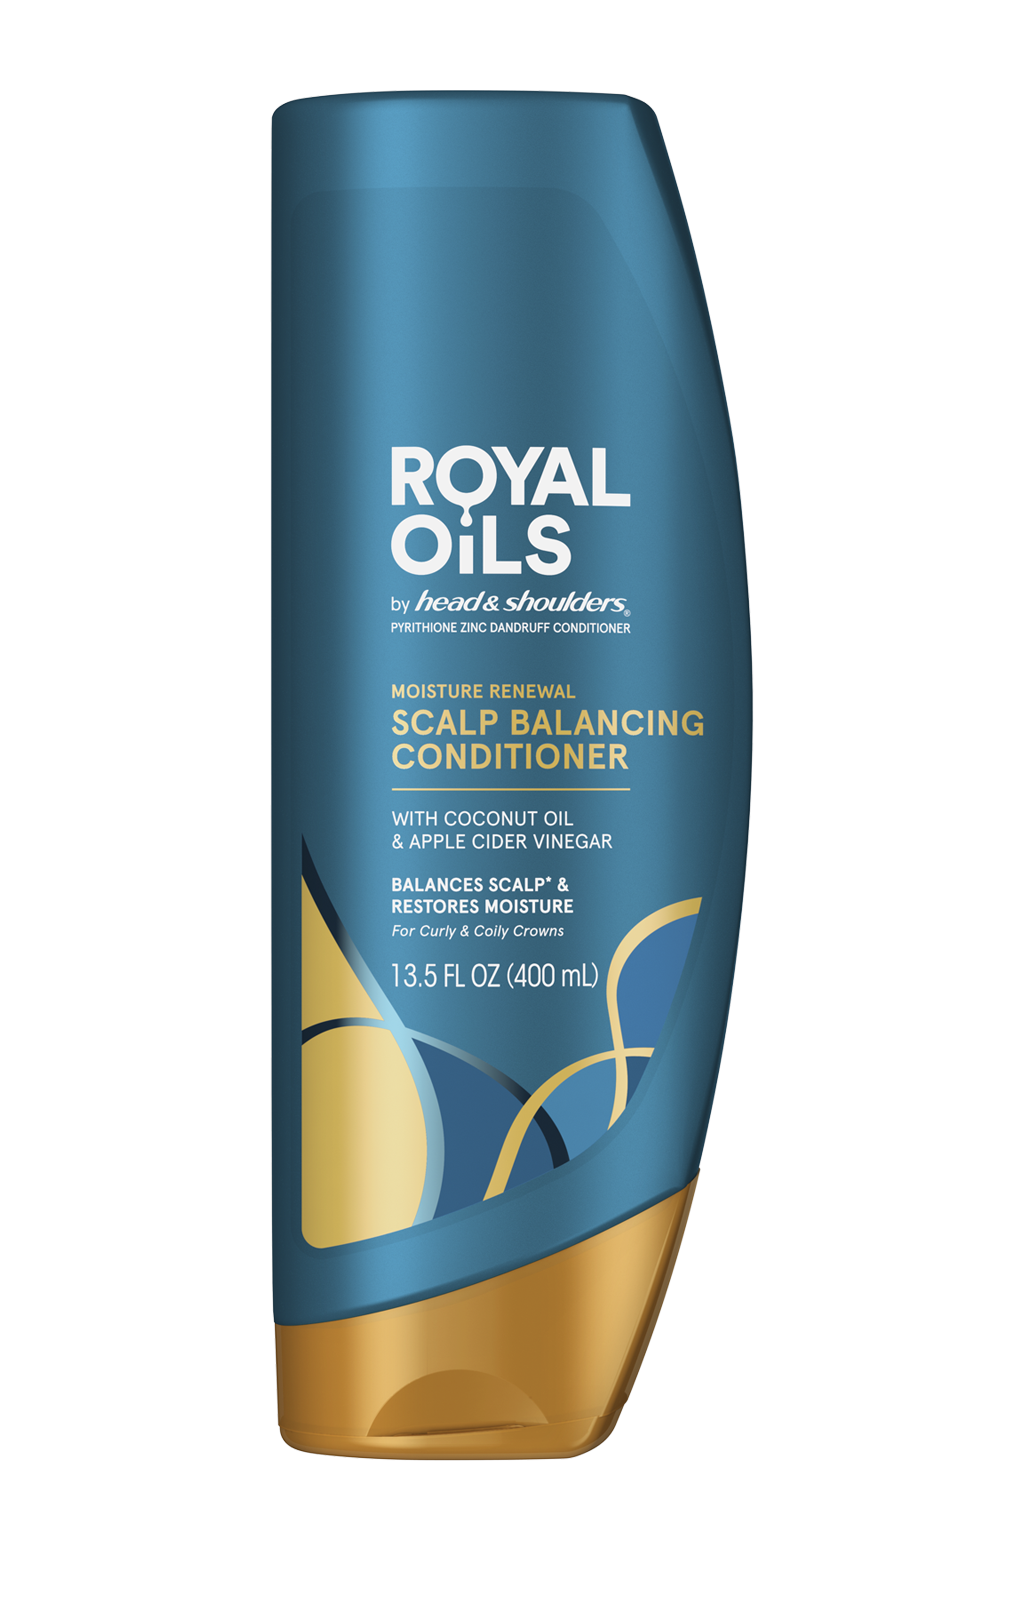 head & shoulders Royal Oils Moisture Renewal Conditioner